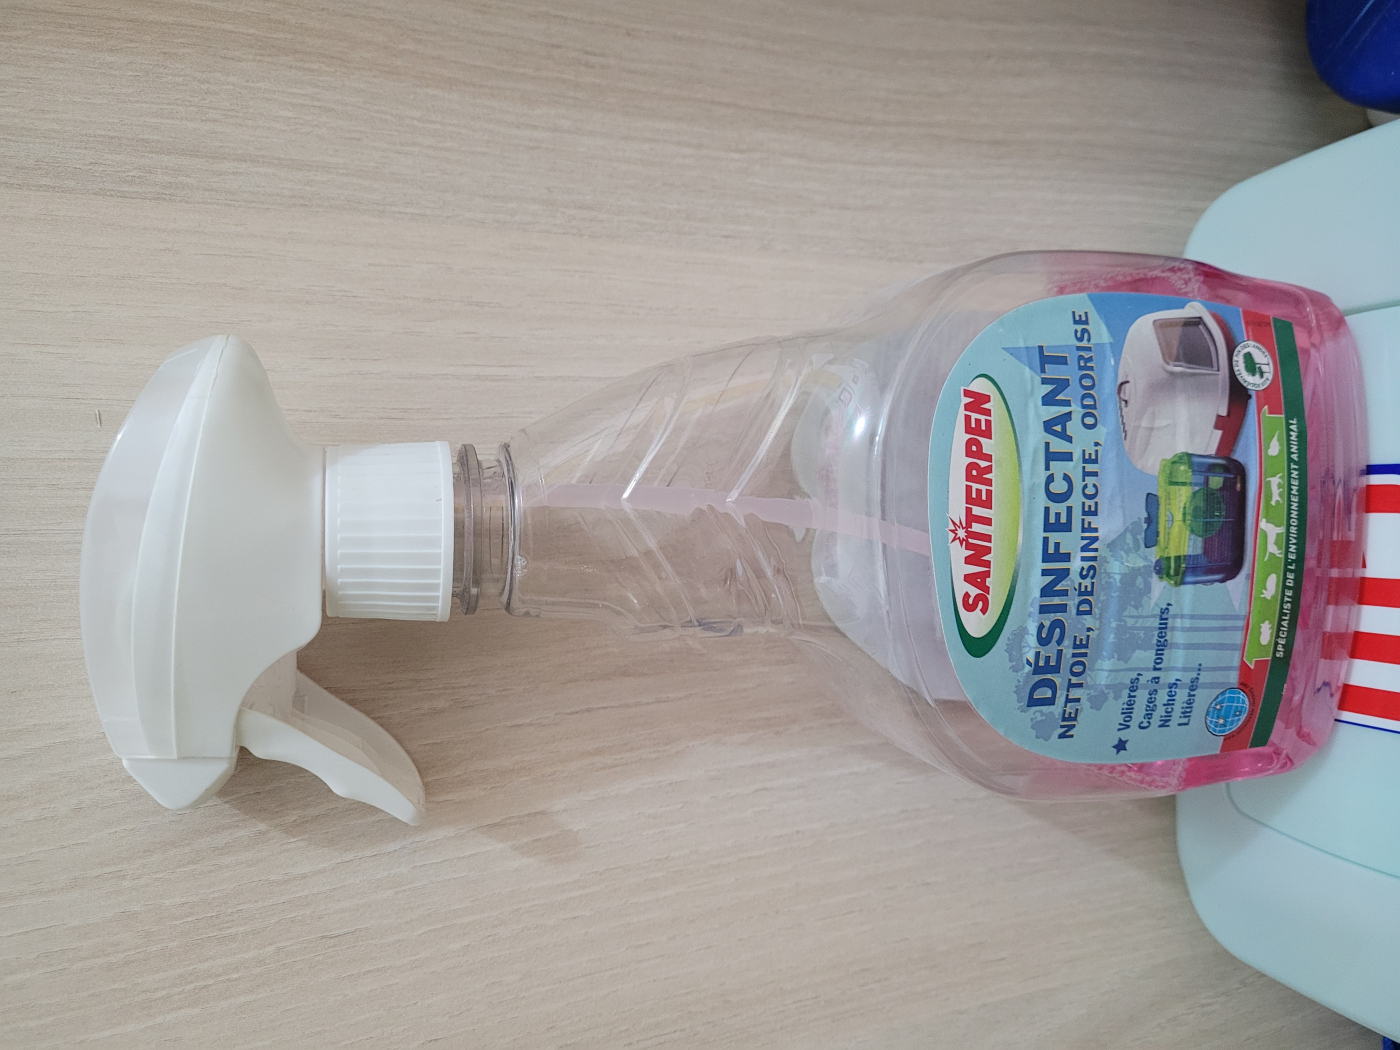 Saniterpen Sanispray nettoyant désinfectant odorisisant spray pour